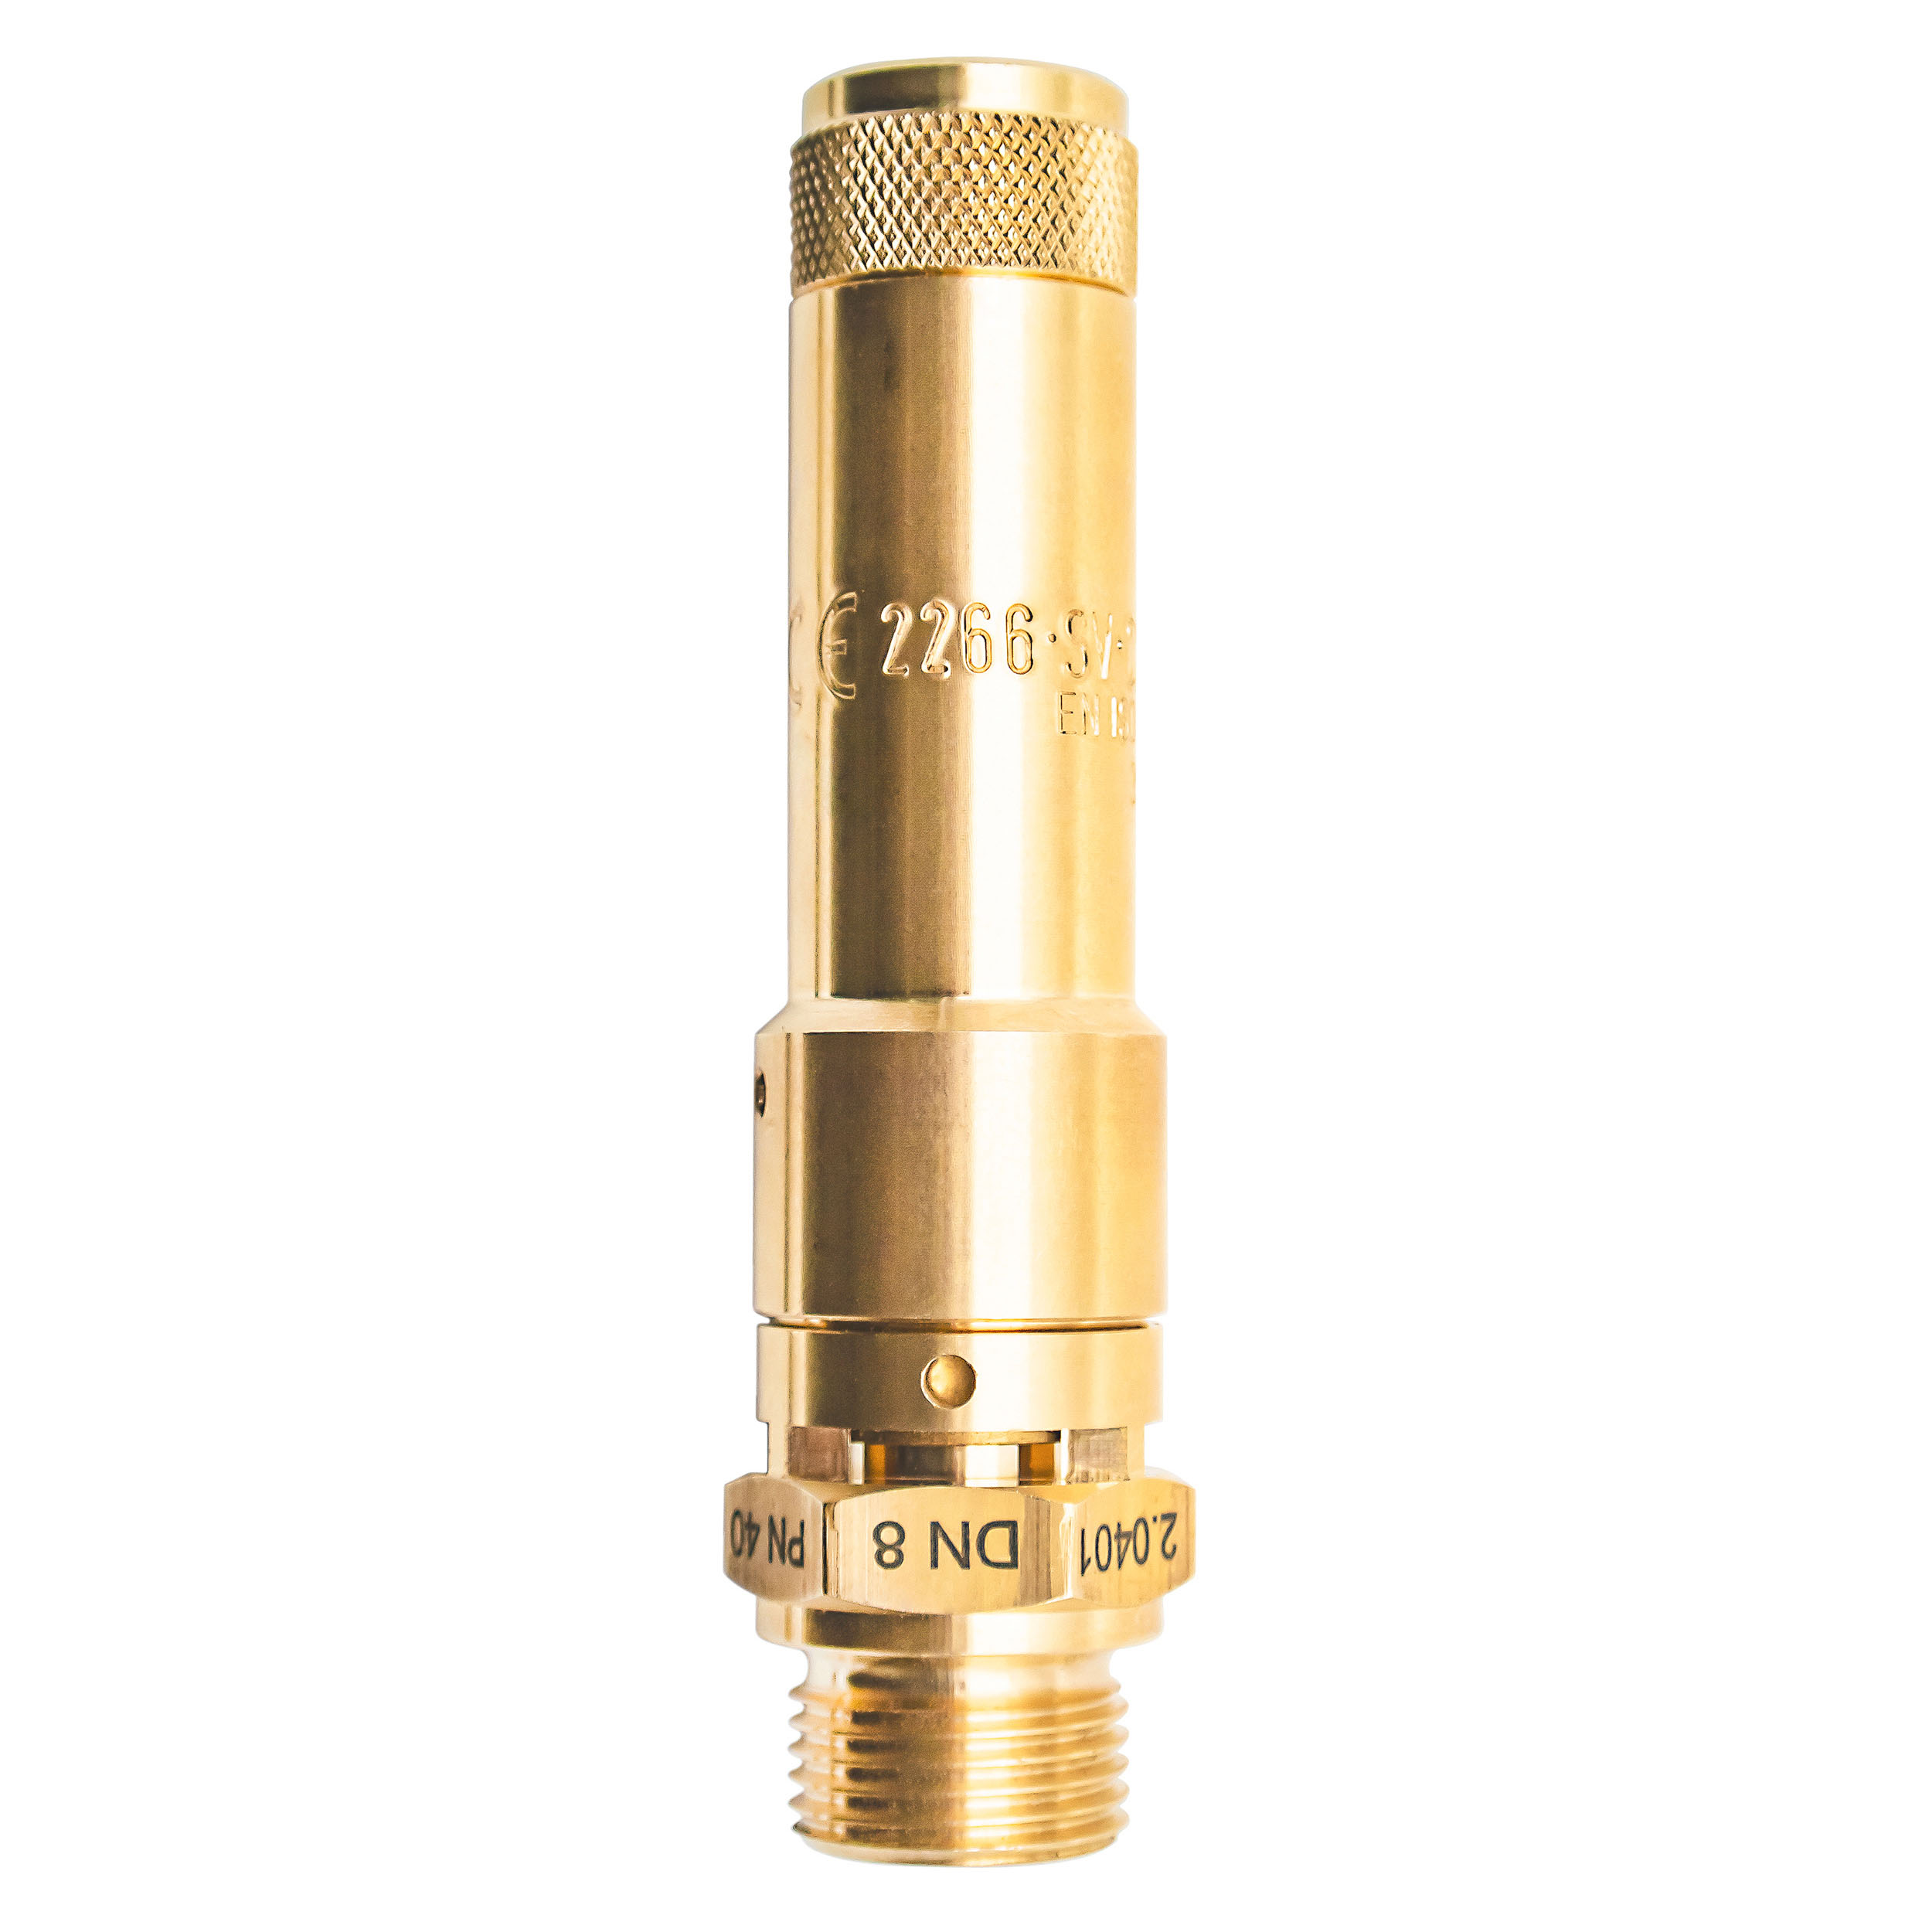 Savety valve component tested DN 8, G½, set pressure: 8.2 bar (118,9 psi)